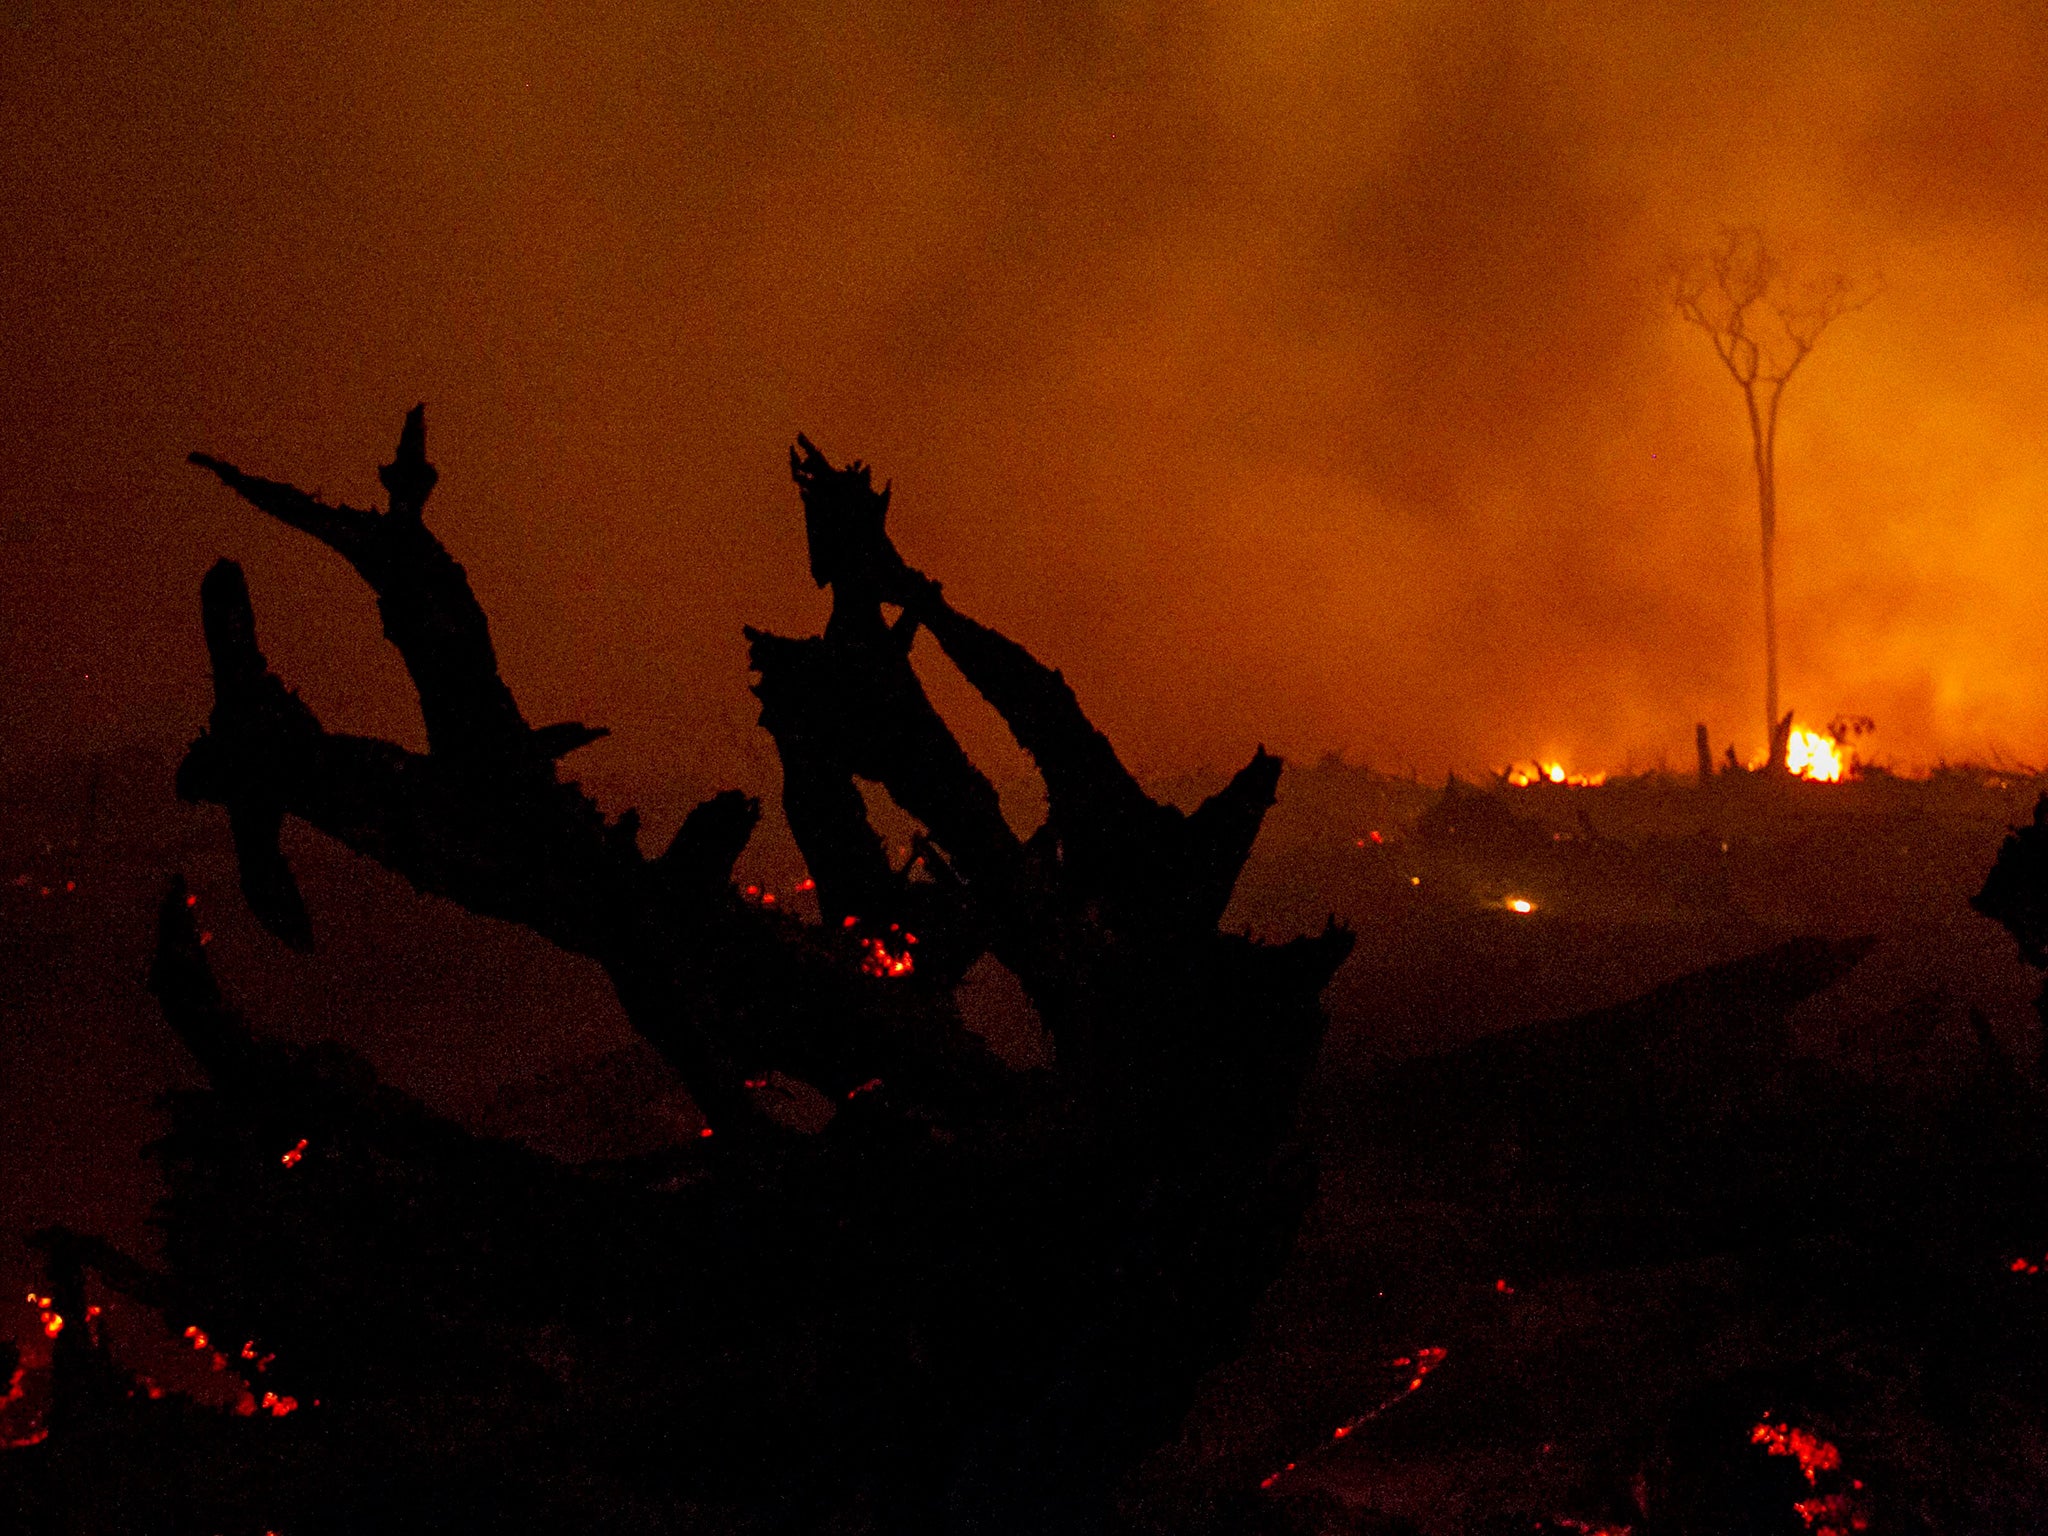 Burning peatland in the outskirts of Palangkaraya, Central Kalimantan, Indonesia, 1 November 2015